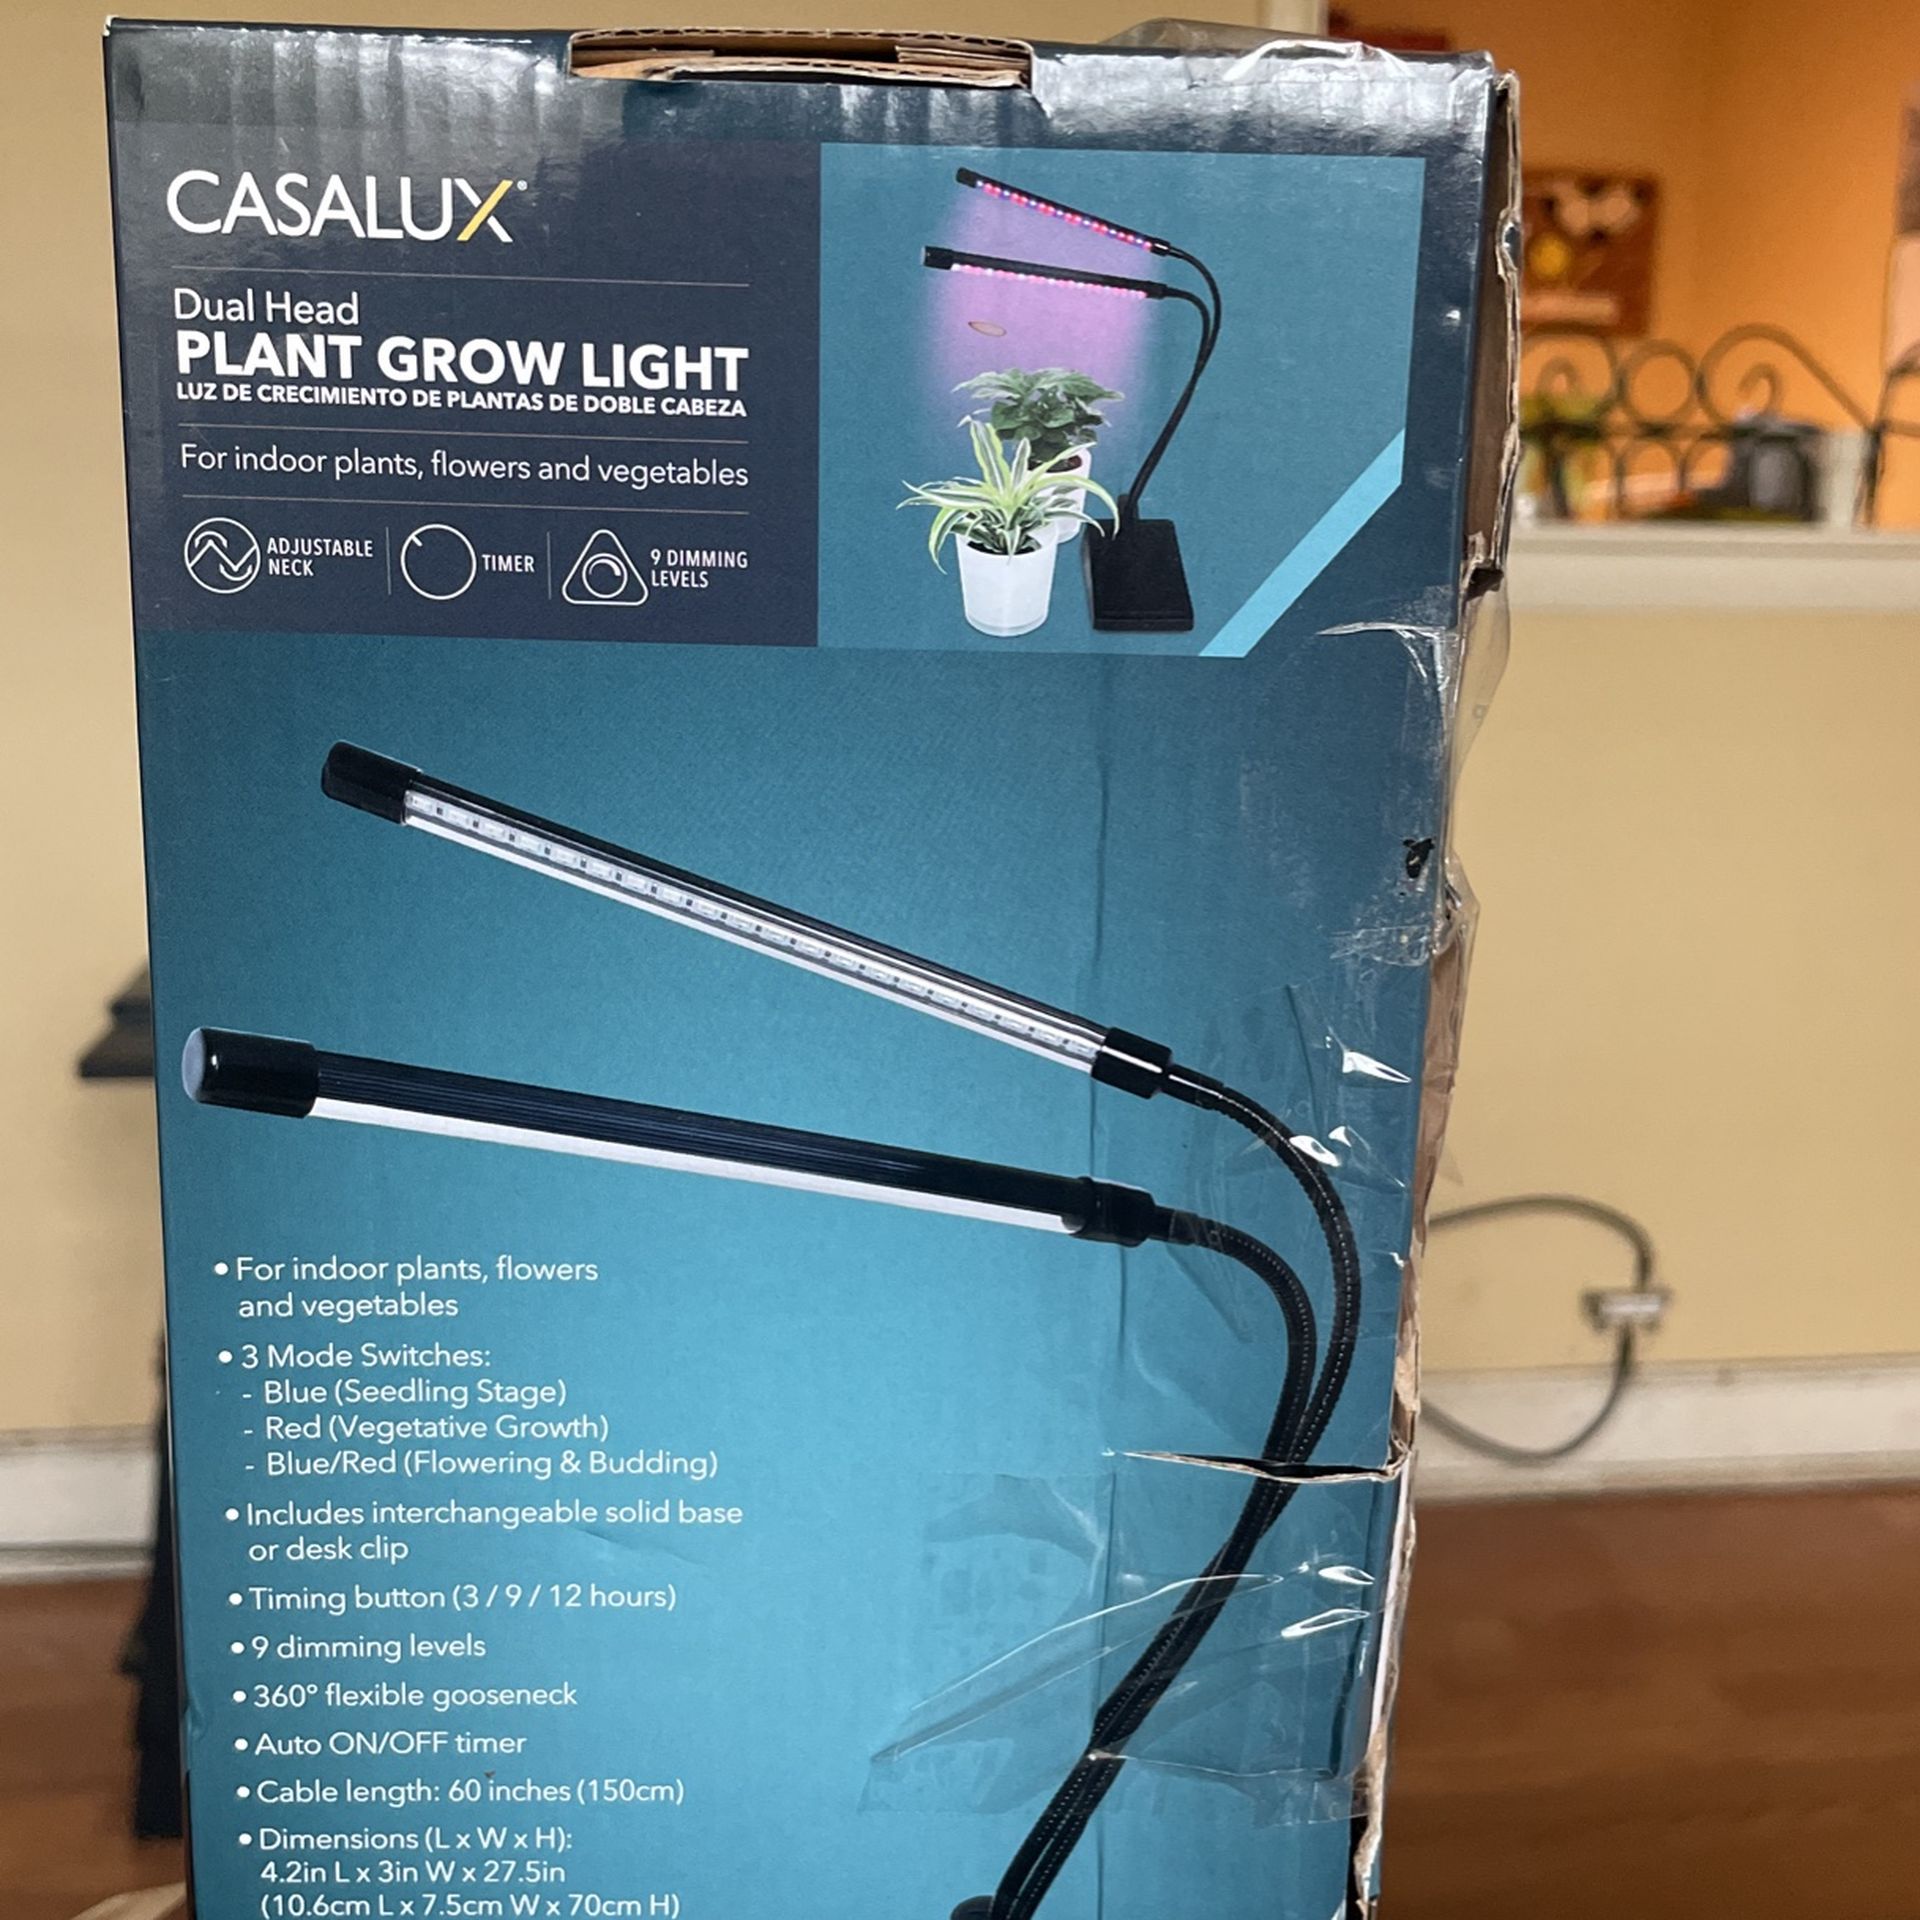 Casalux Dual Head Plant Grow Light